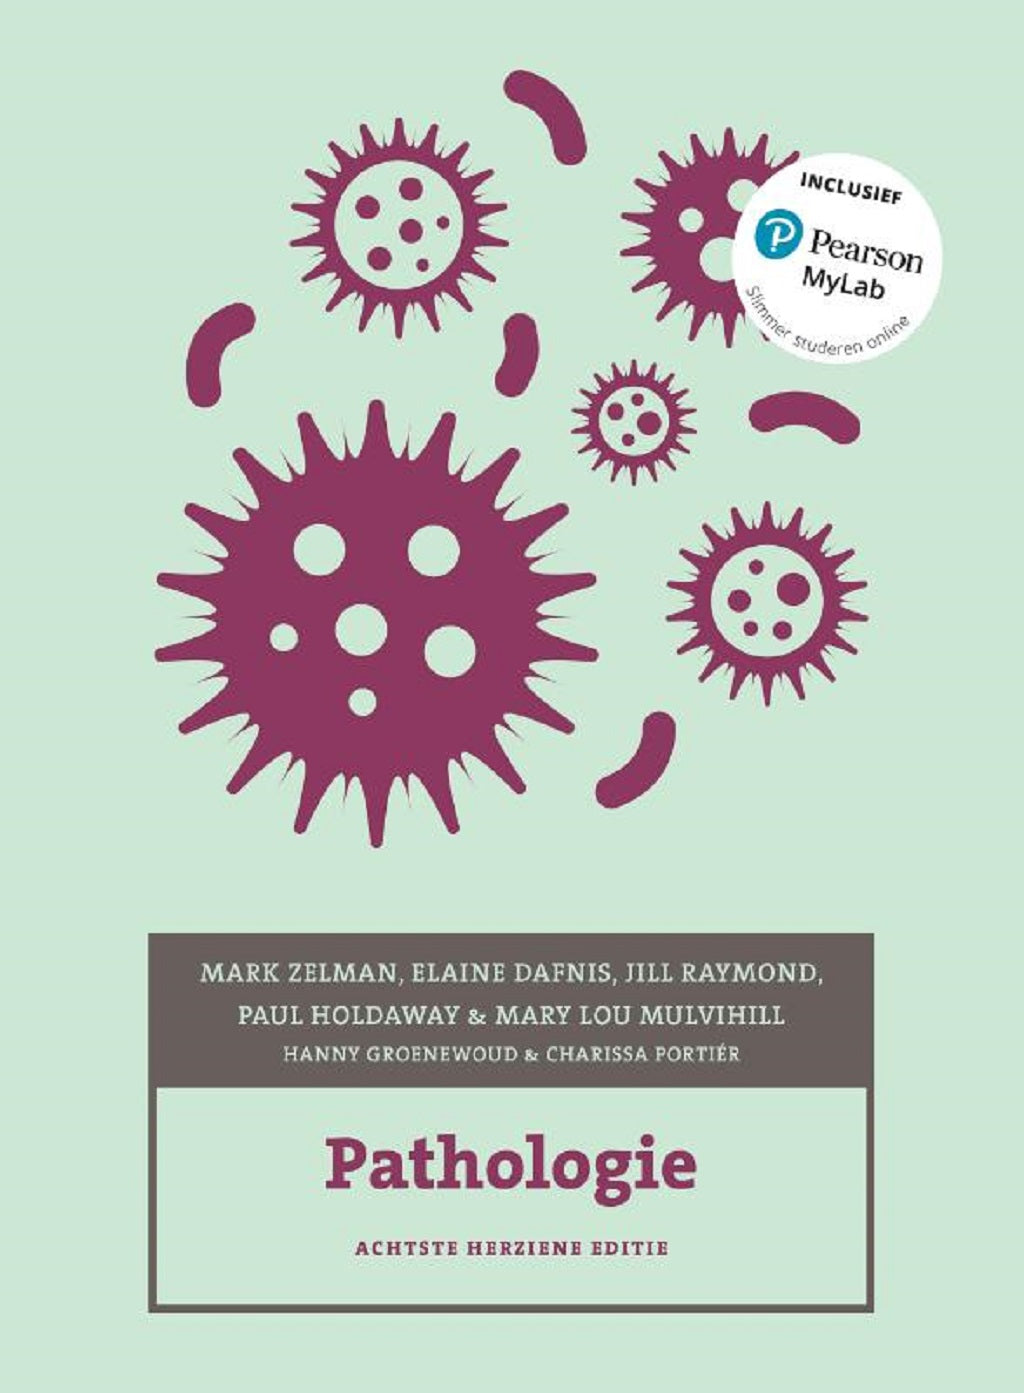 Pathologie, 8e herziene editie (Print boek + MyLab toegangscode)